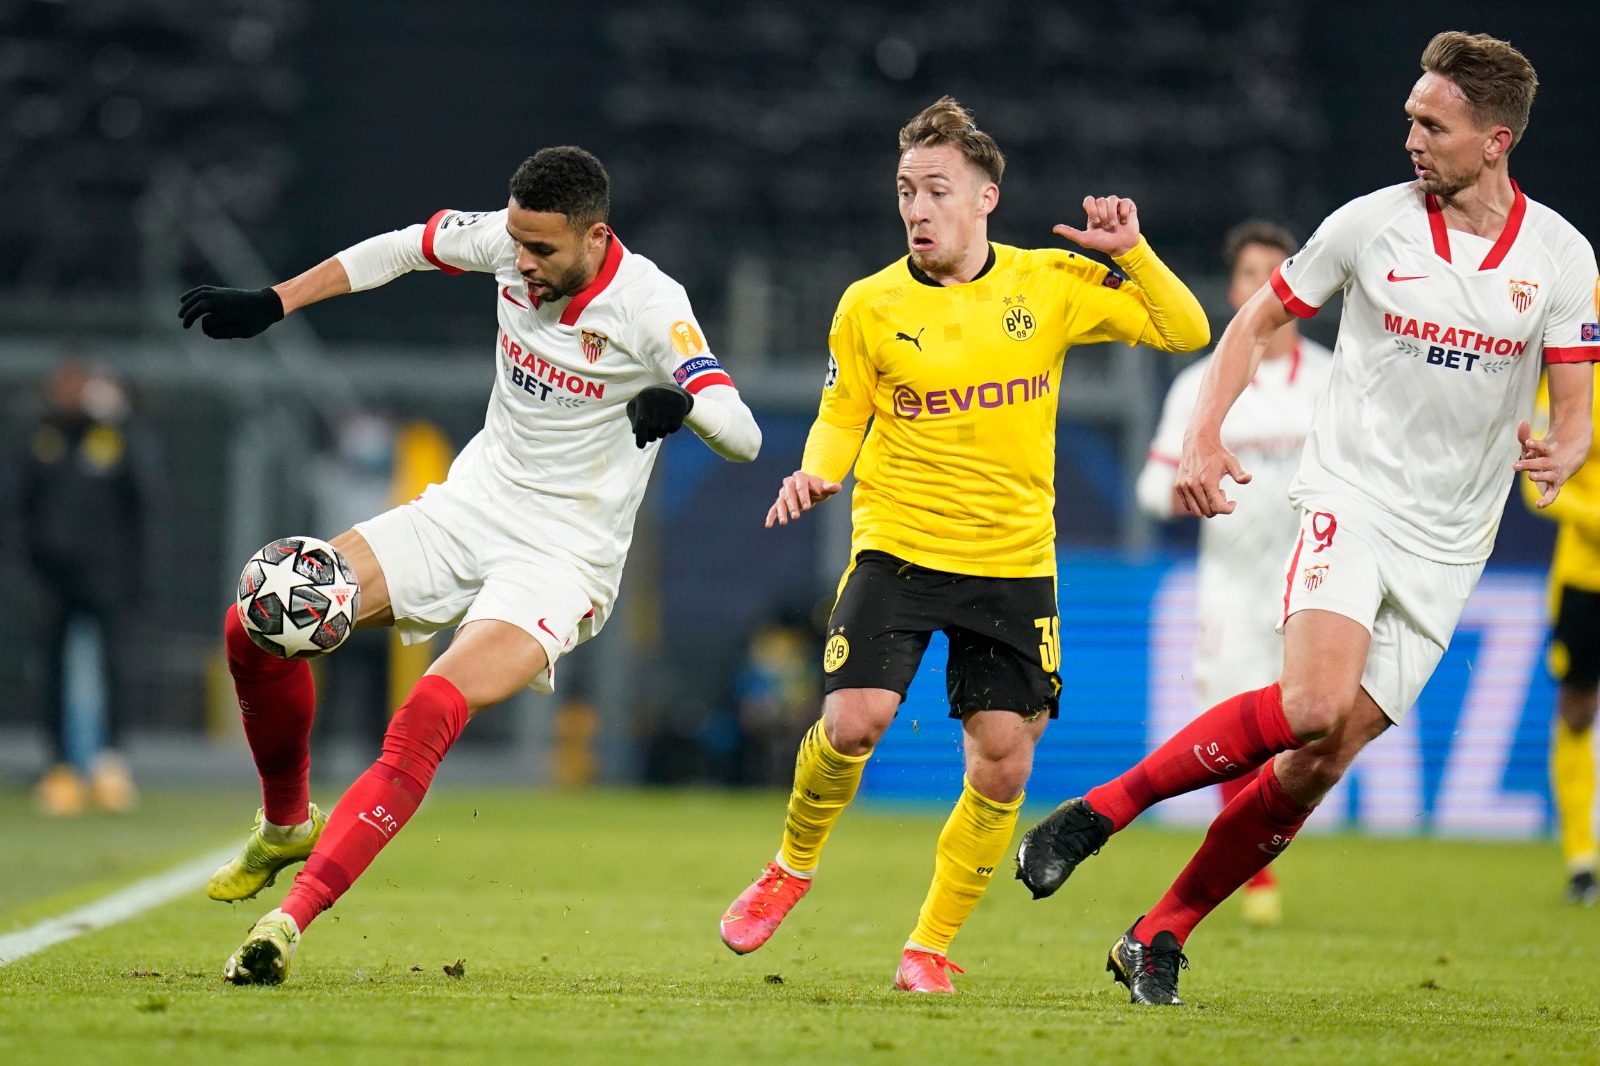 Sevilla FC's En-Nesyri against Borussia Dortmund